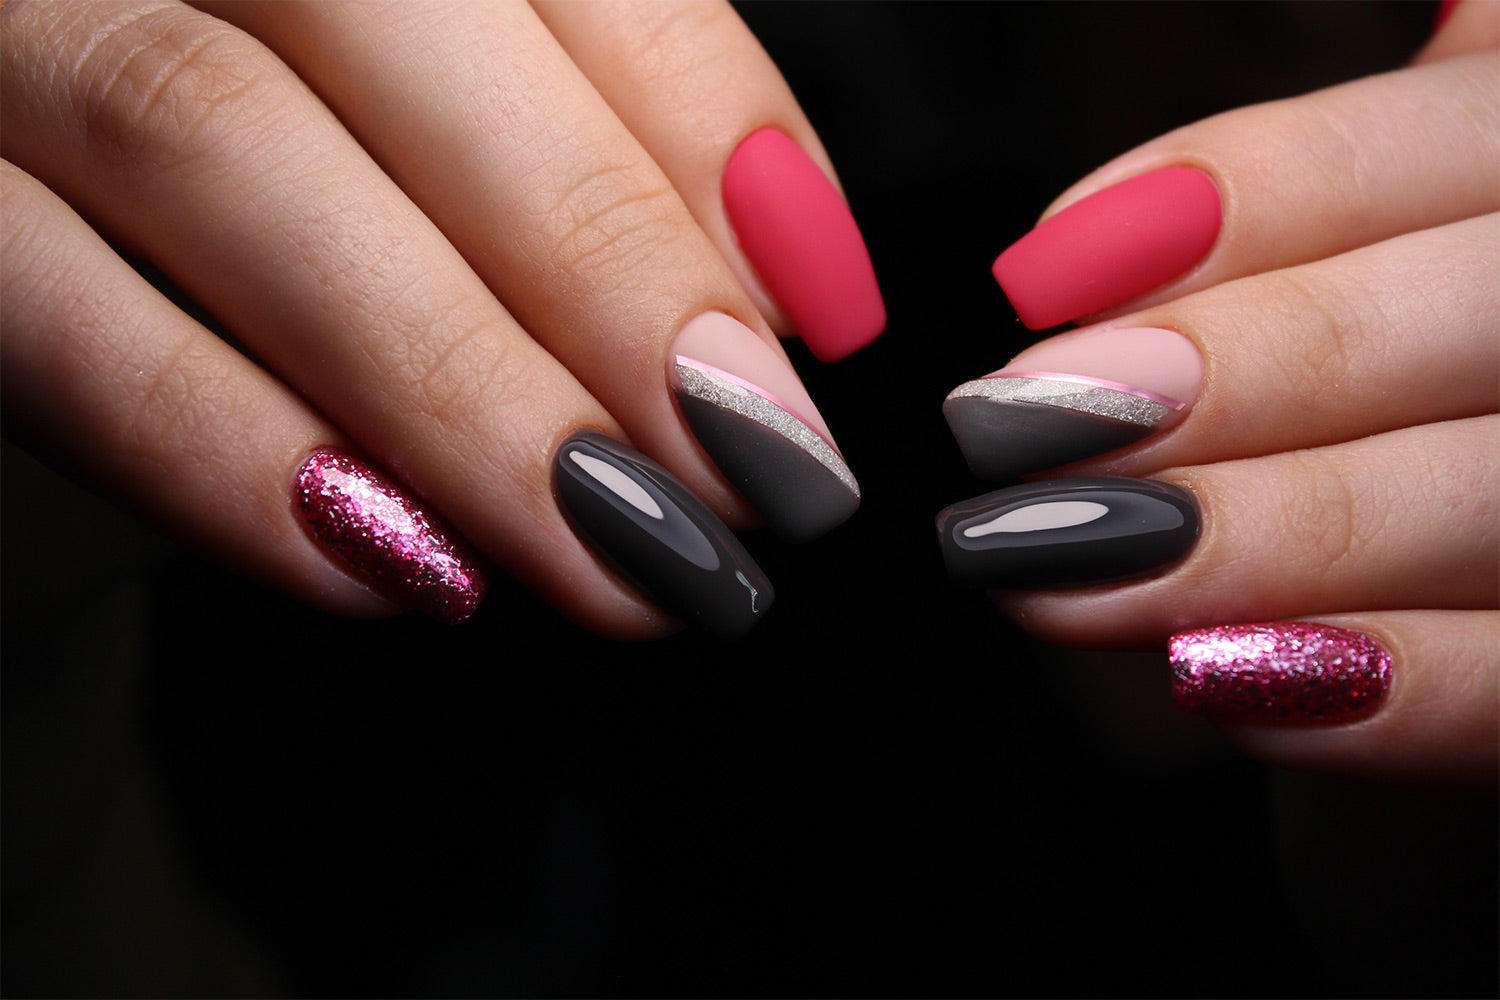 LV Slayy Nails  Curved nails, Glamour nails, Nails